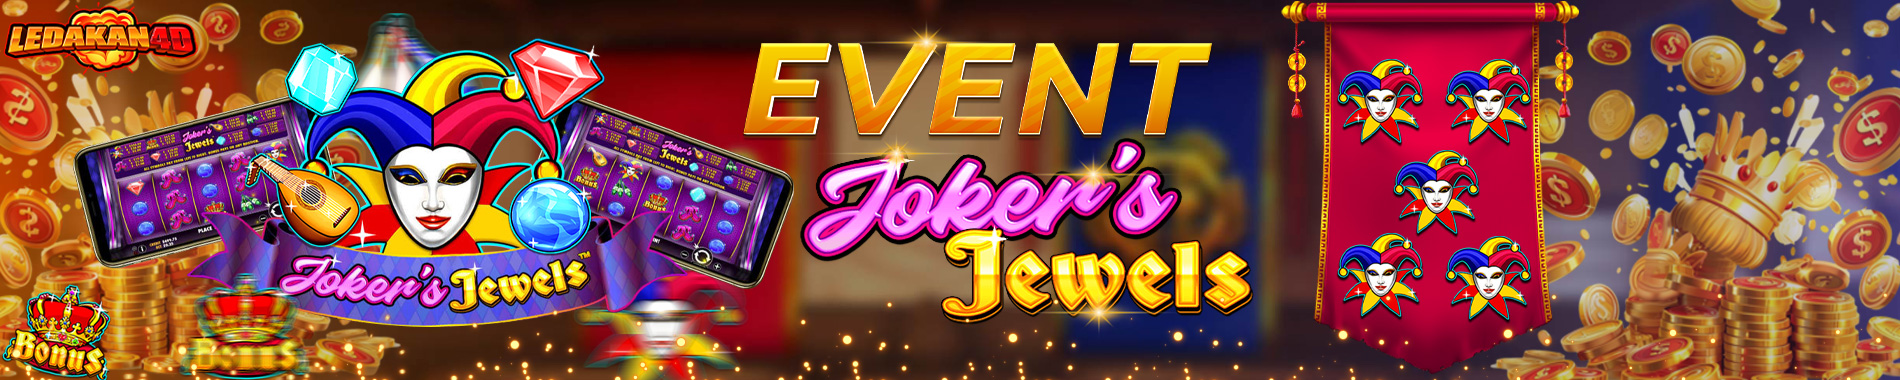 Event-Joker-Jewels-LEDAKAN4D